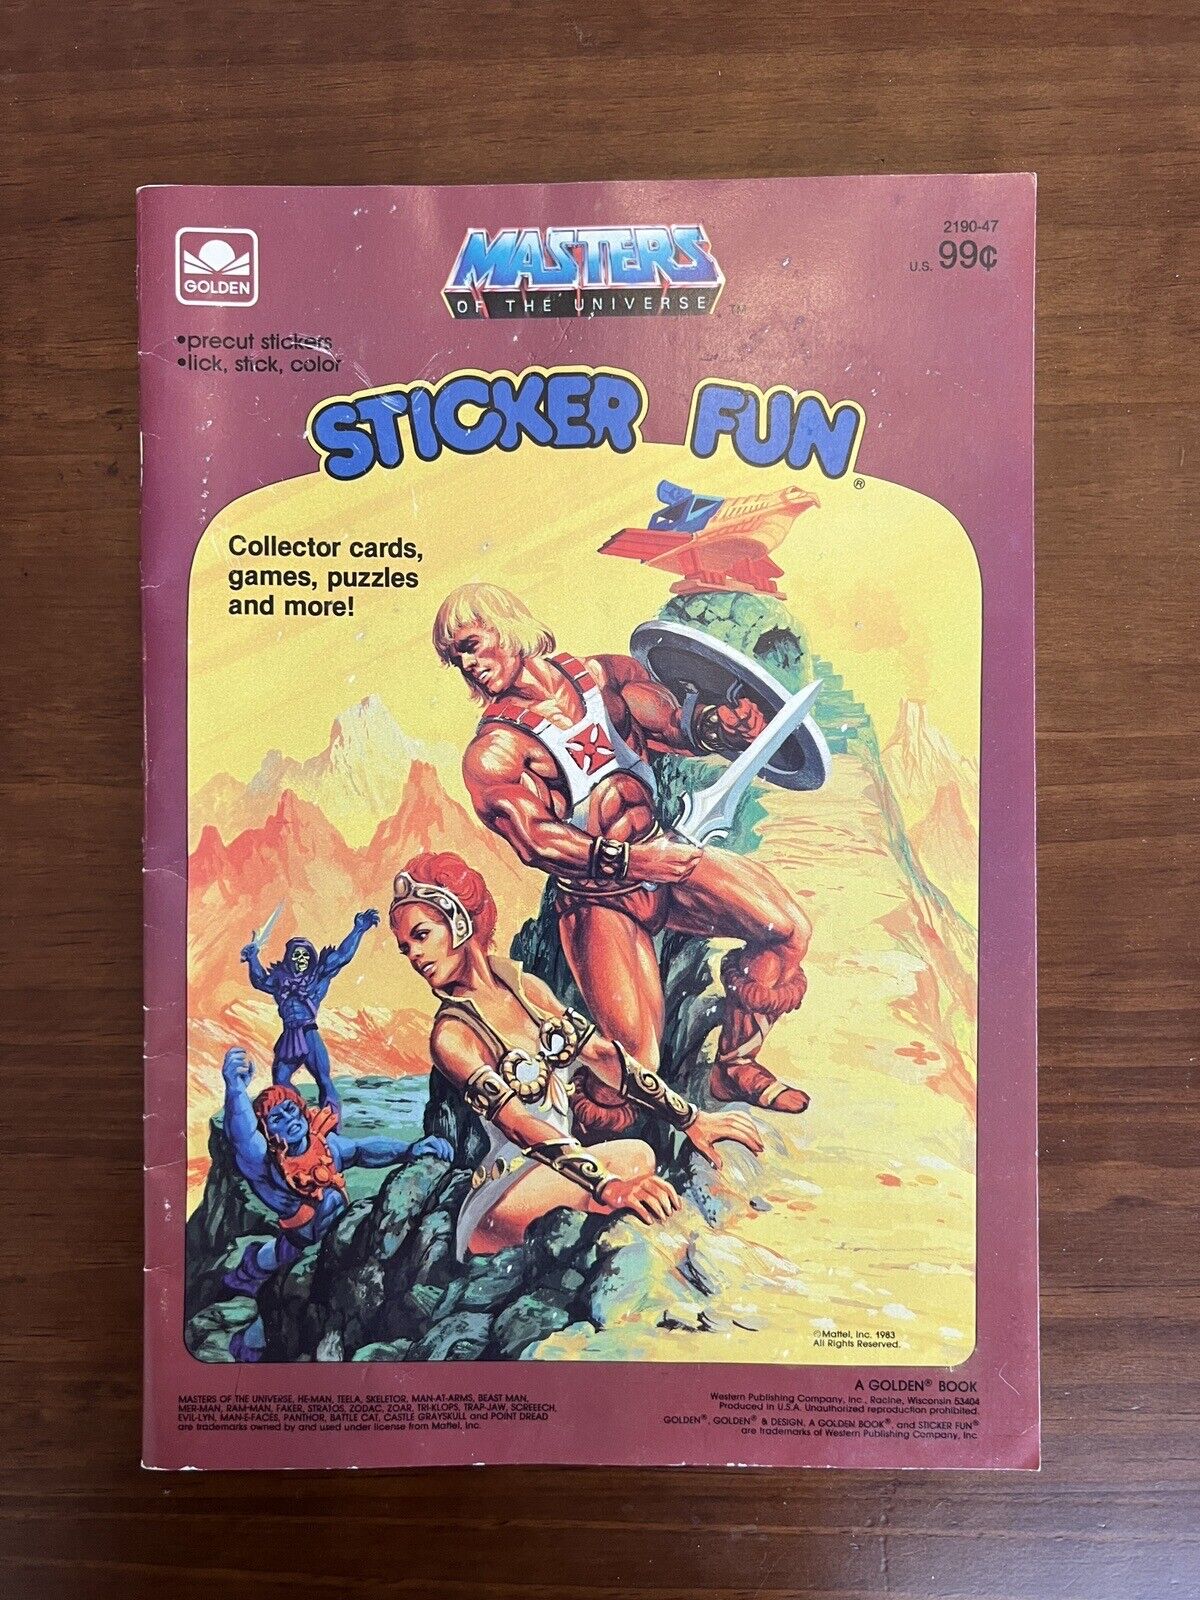 Vintage 1983 Masters of the Universe MOTU Sticker Fun He-Man, Mer-Man, Skeletor